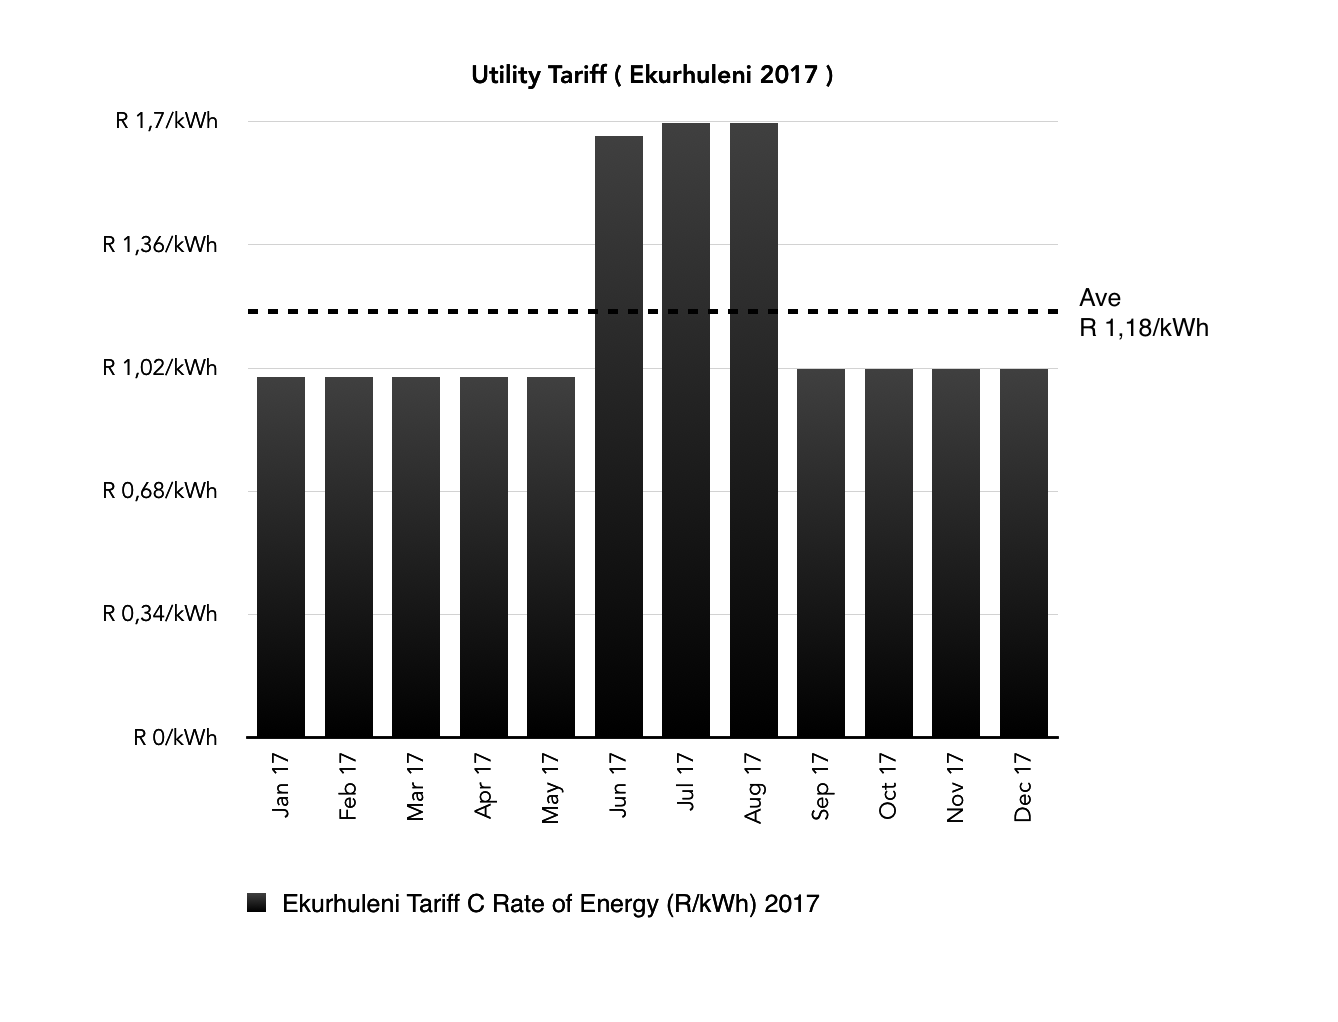 PV Solar versus Ekurhuleni electricity Tariff for business